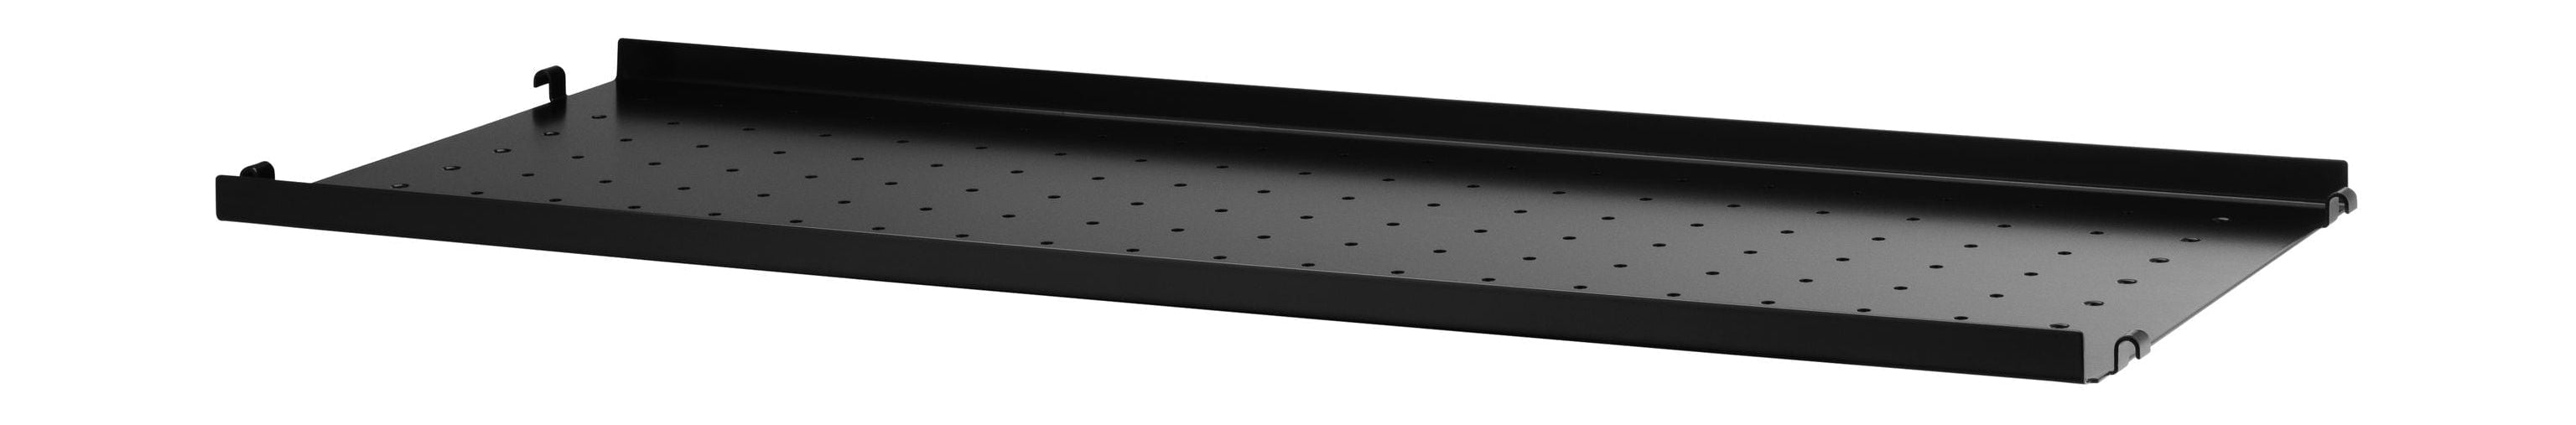 Strengmøbler Strengsystem Metalhylde med lav kant 30x78 cm, sort